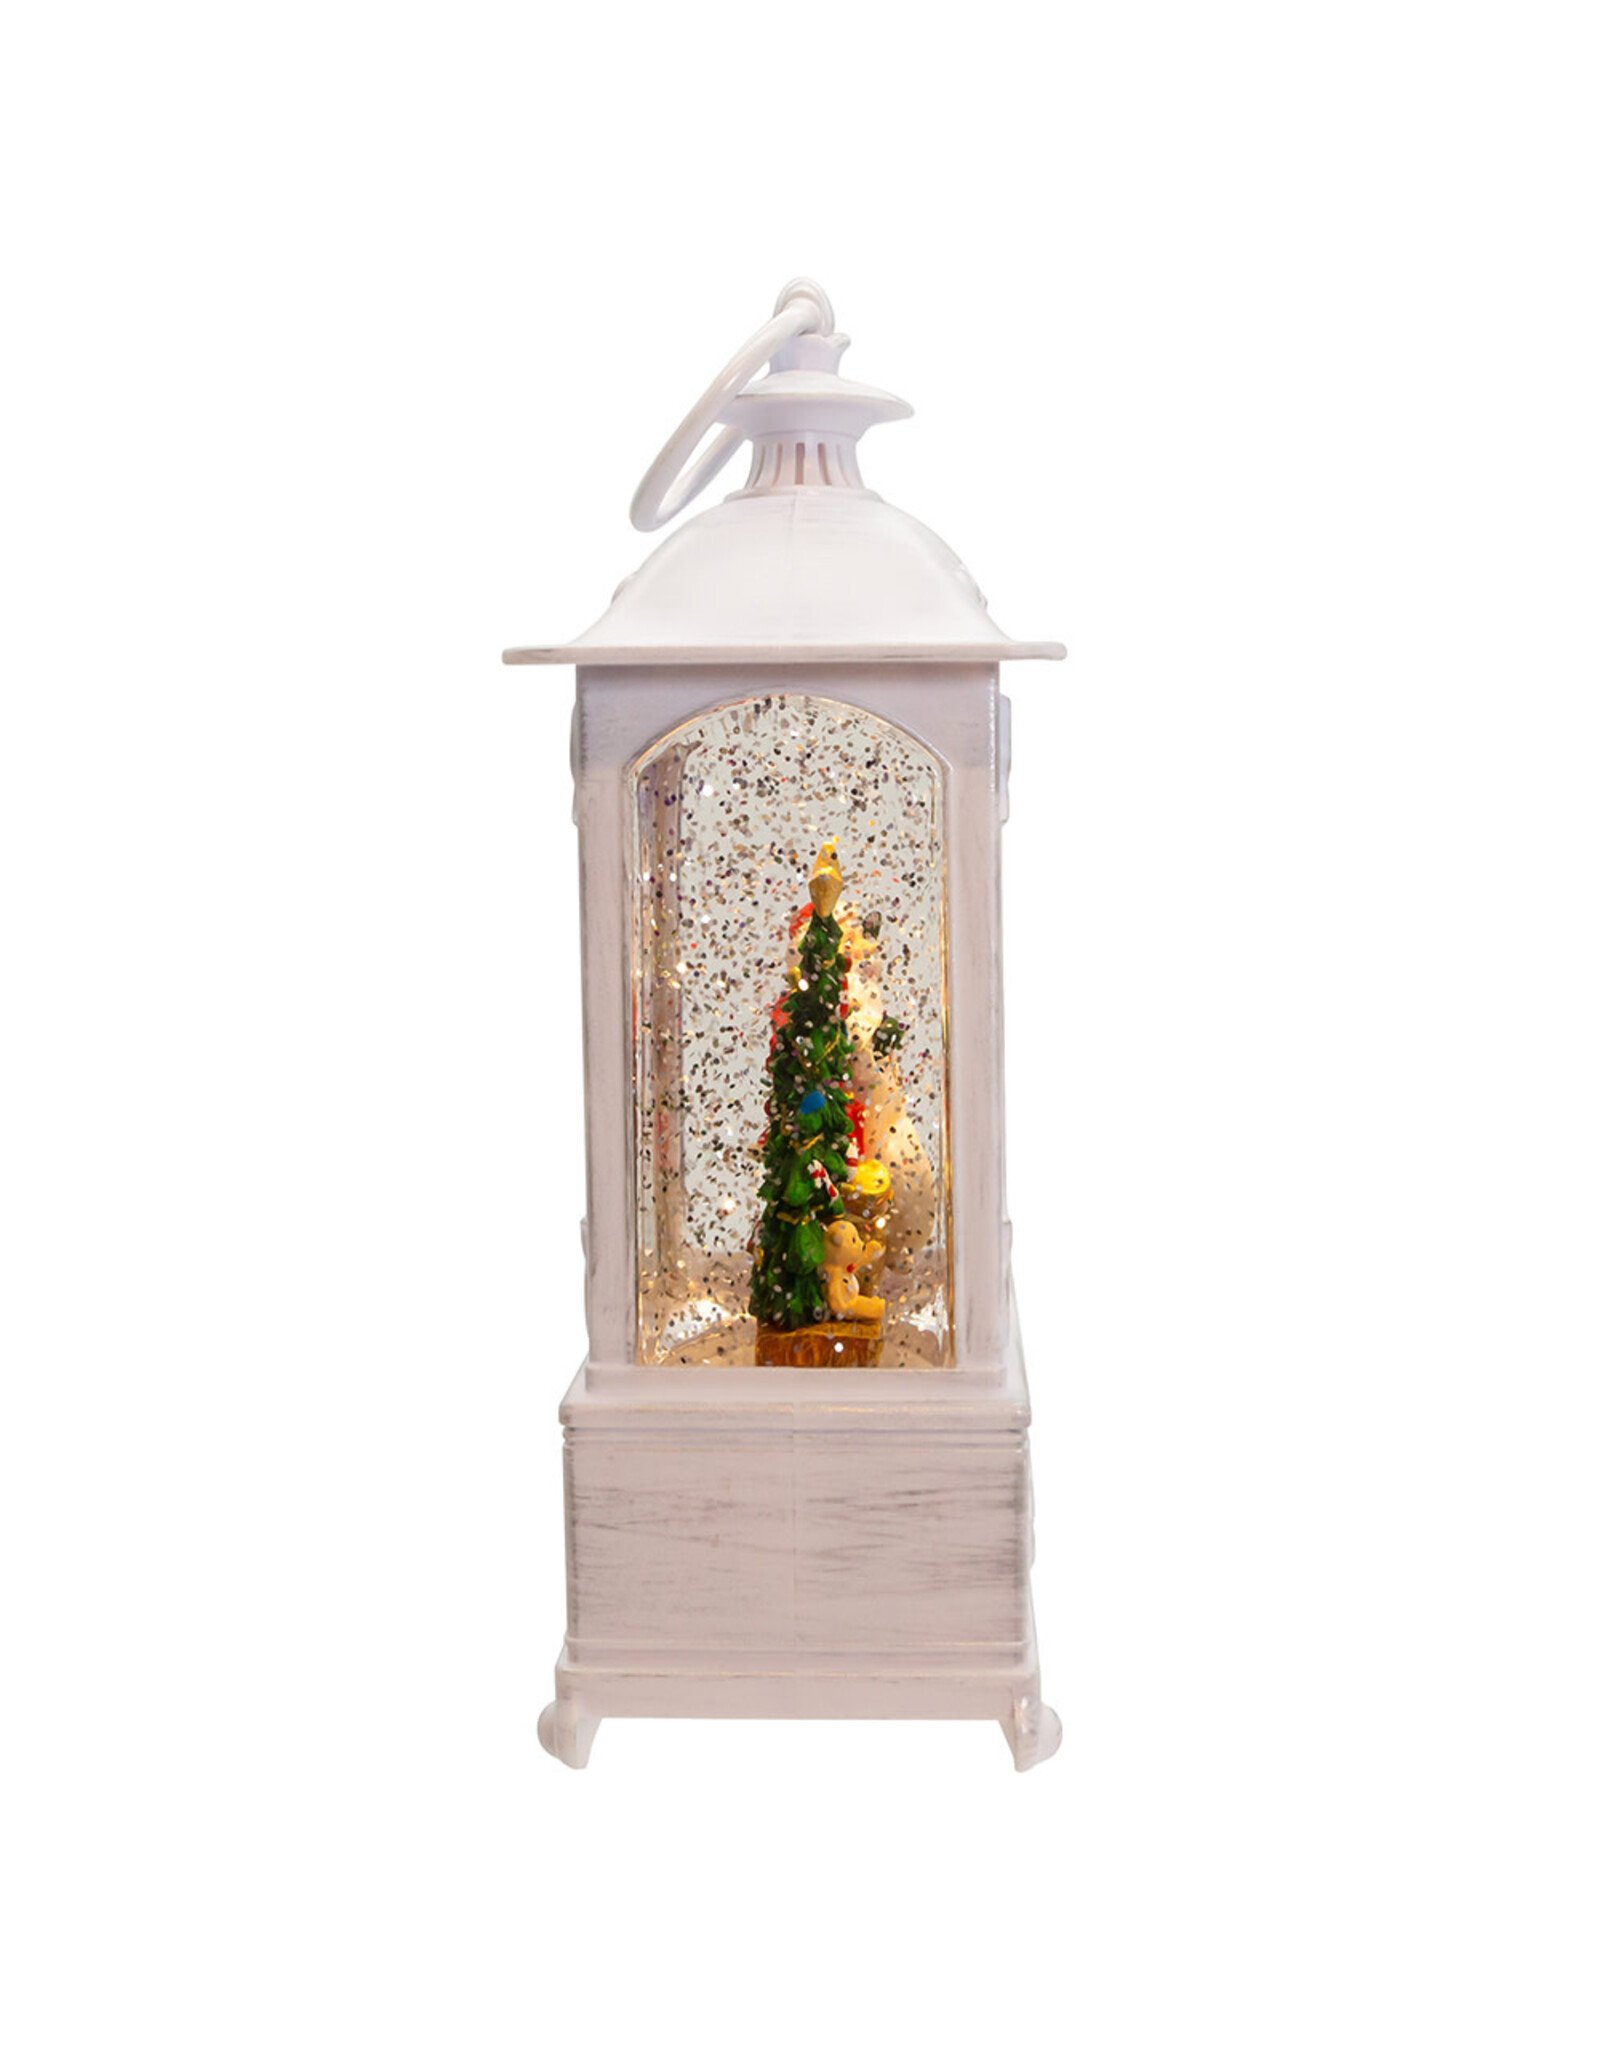 Kurt Adler Snow Globe Water Lanterns LED Santa W Gifts 10 Inch B/O